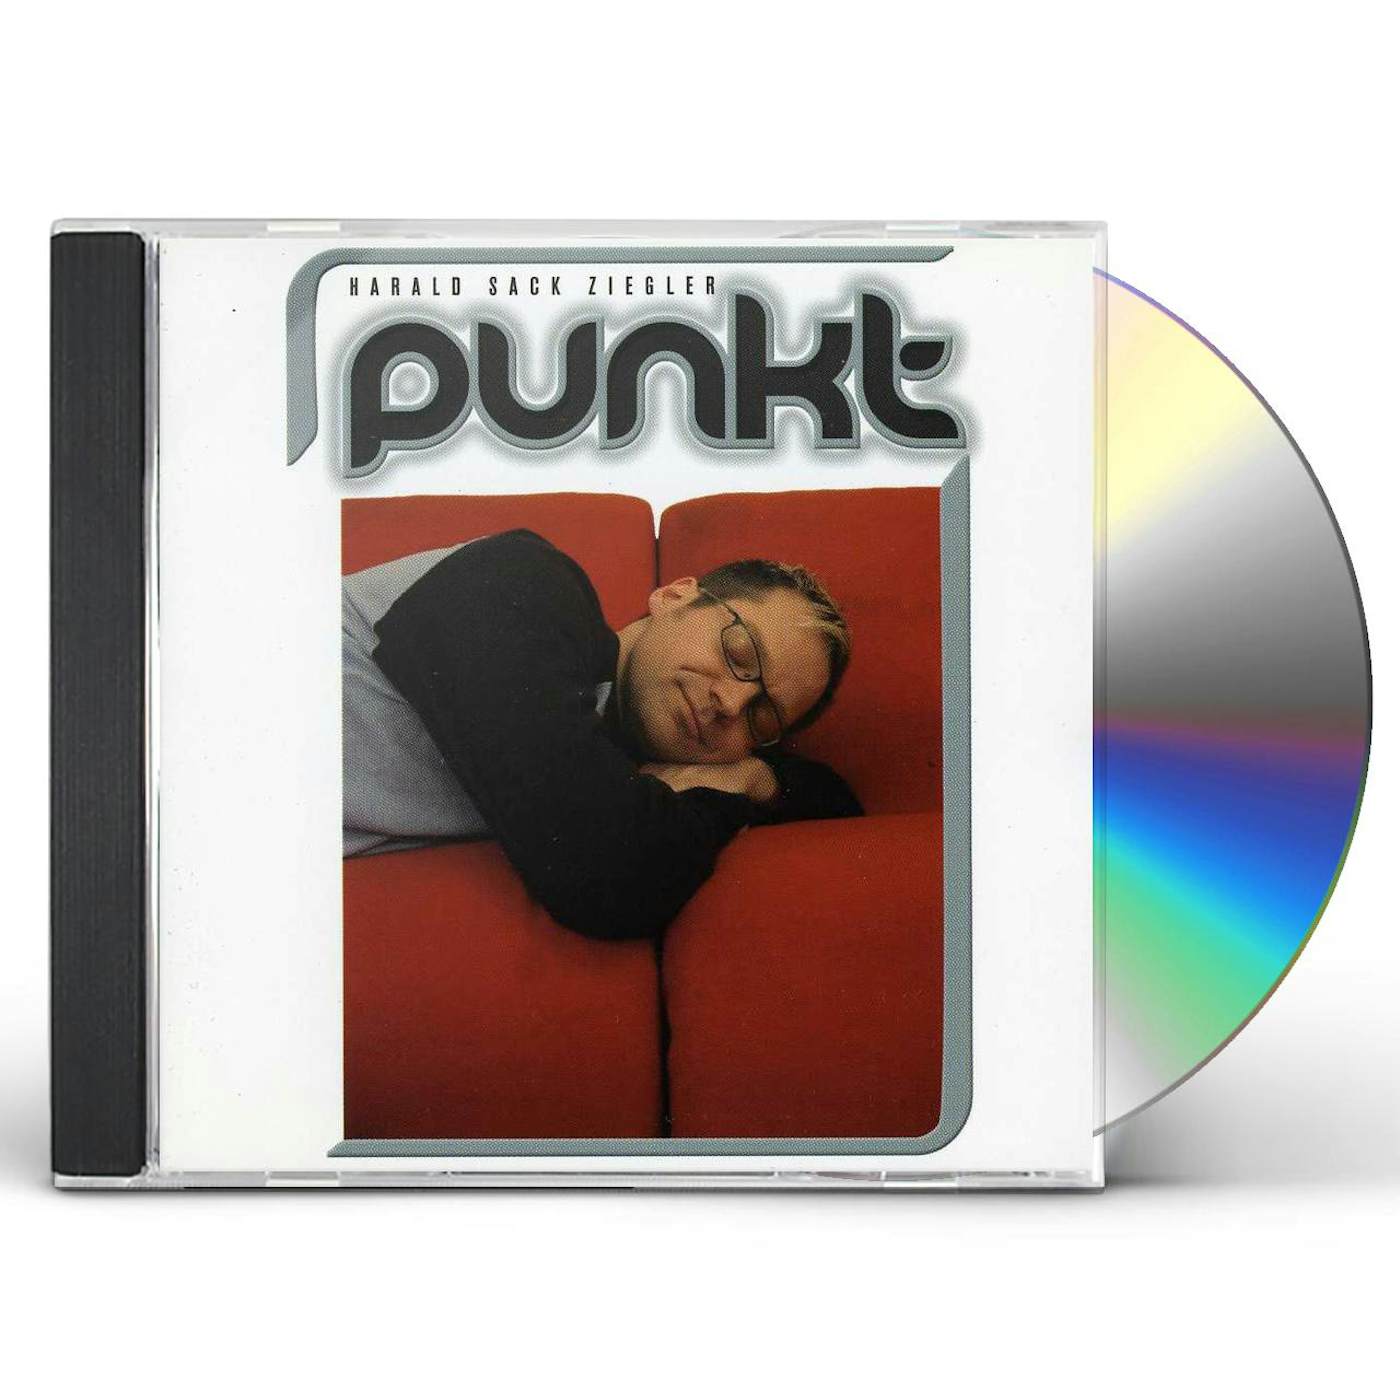 Harald Sack Ziegler PUNKT CD